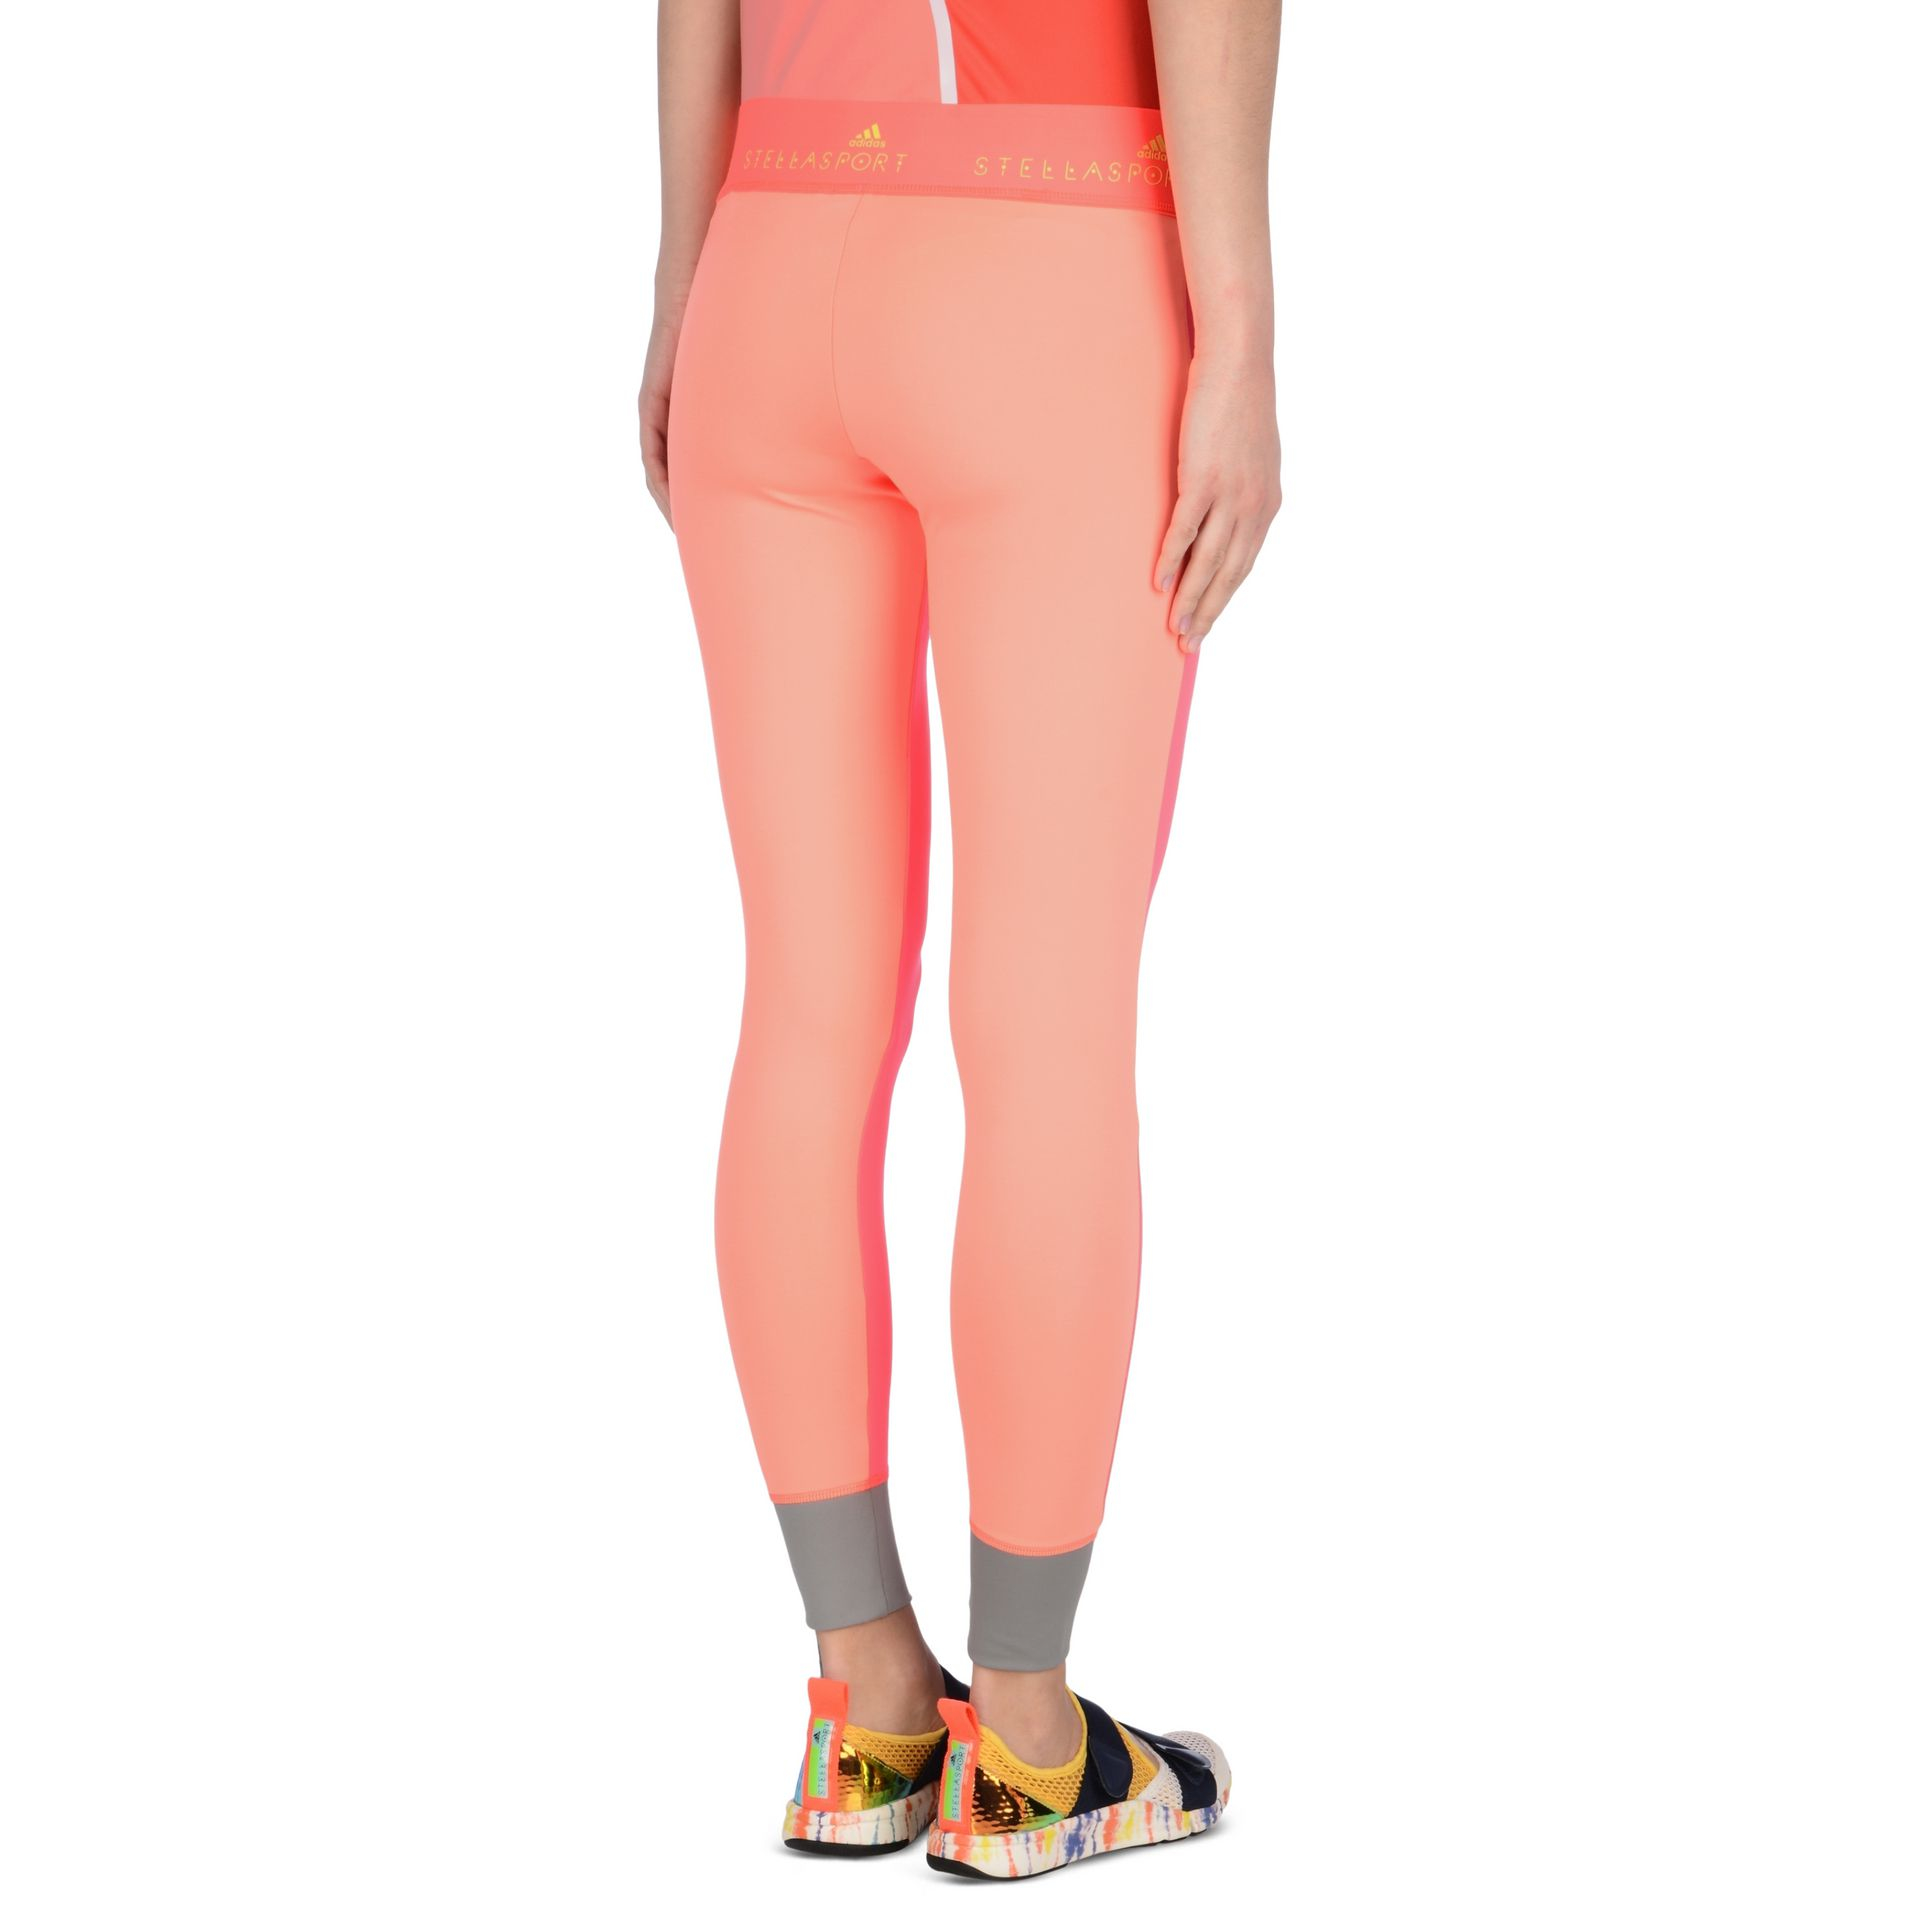 Lyst - Adidas By Stella Mccartney Pink Long Leggings in Pink